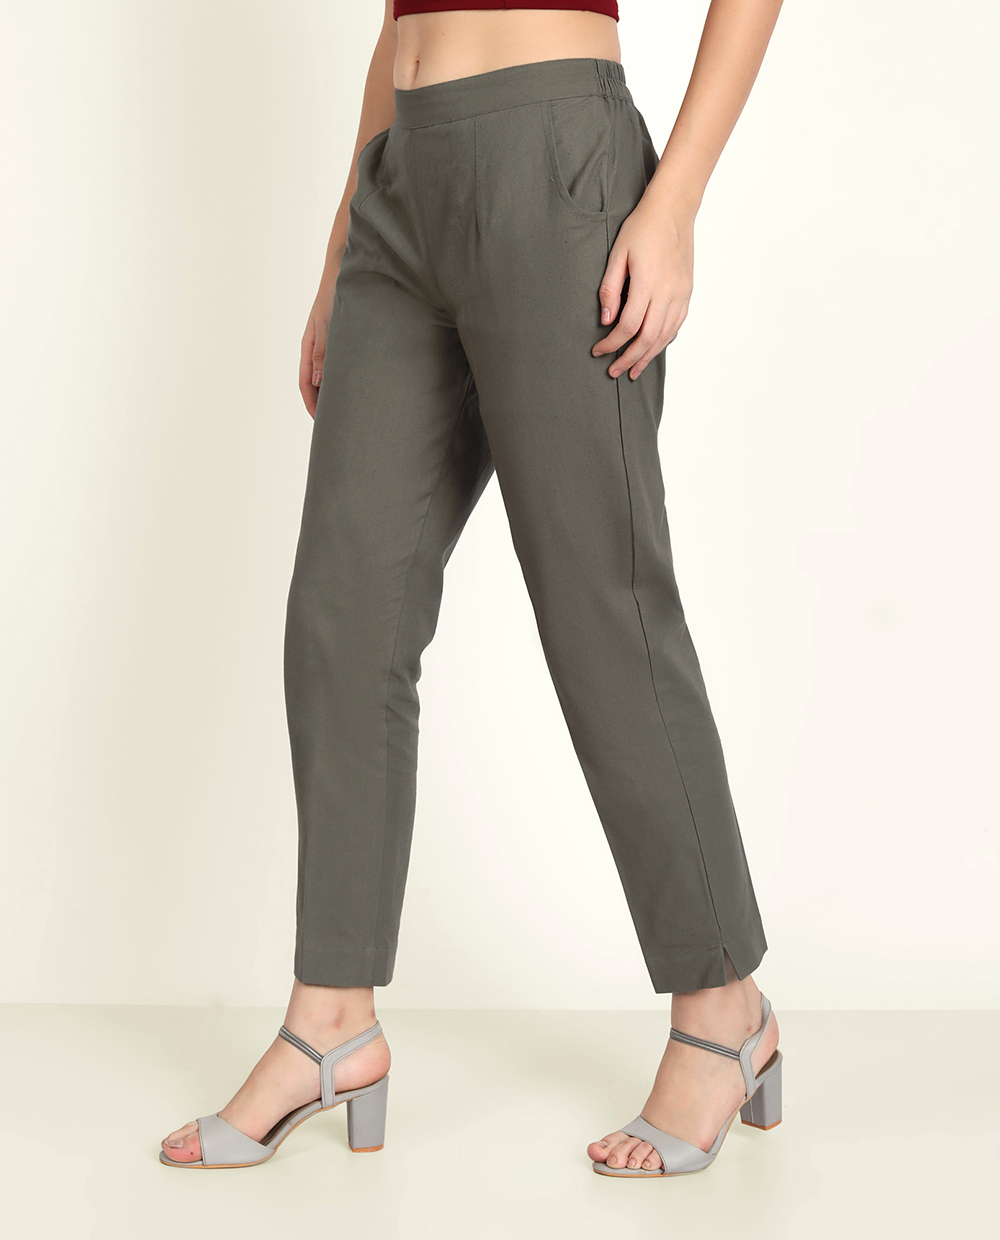 Bottega Veneta® Women's Leather Straight Pants in Olive. Shop online now.